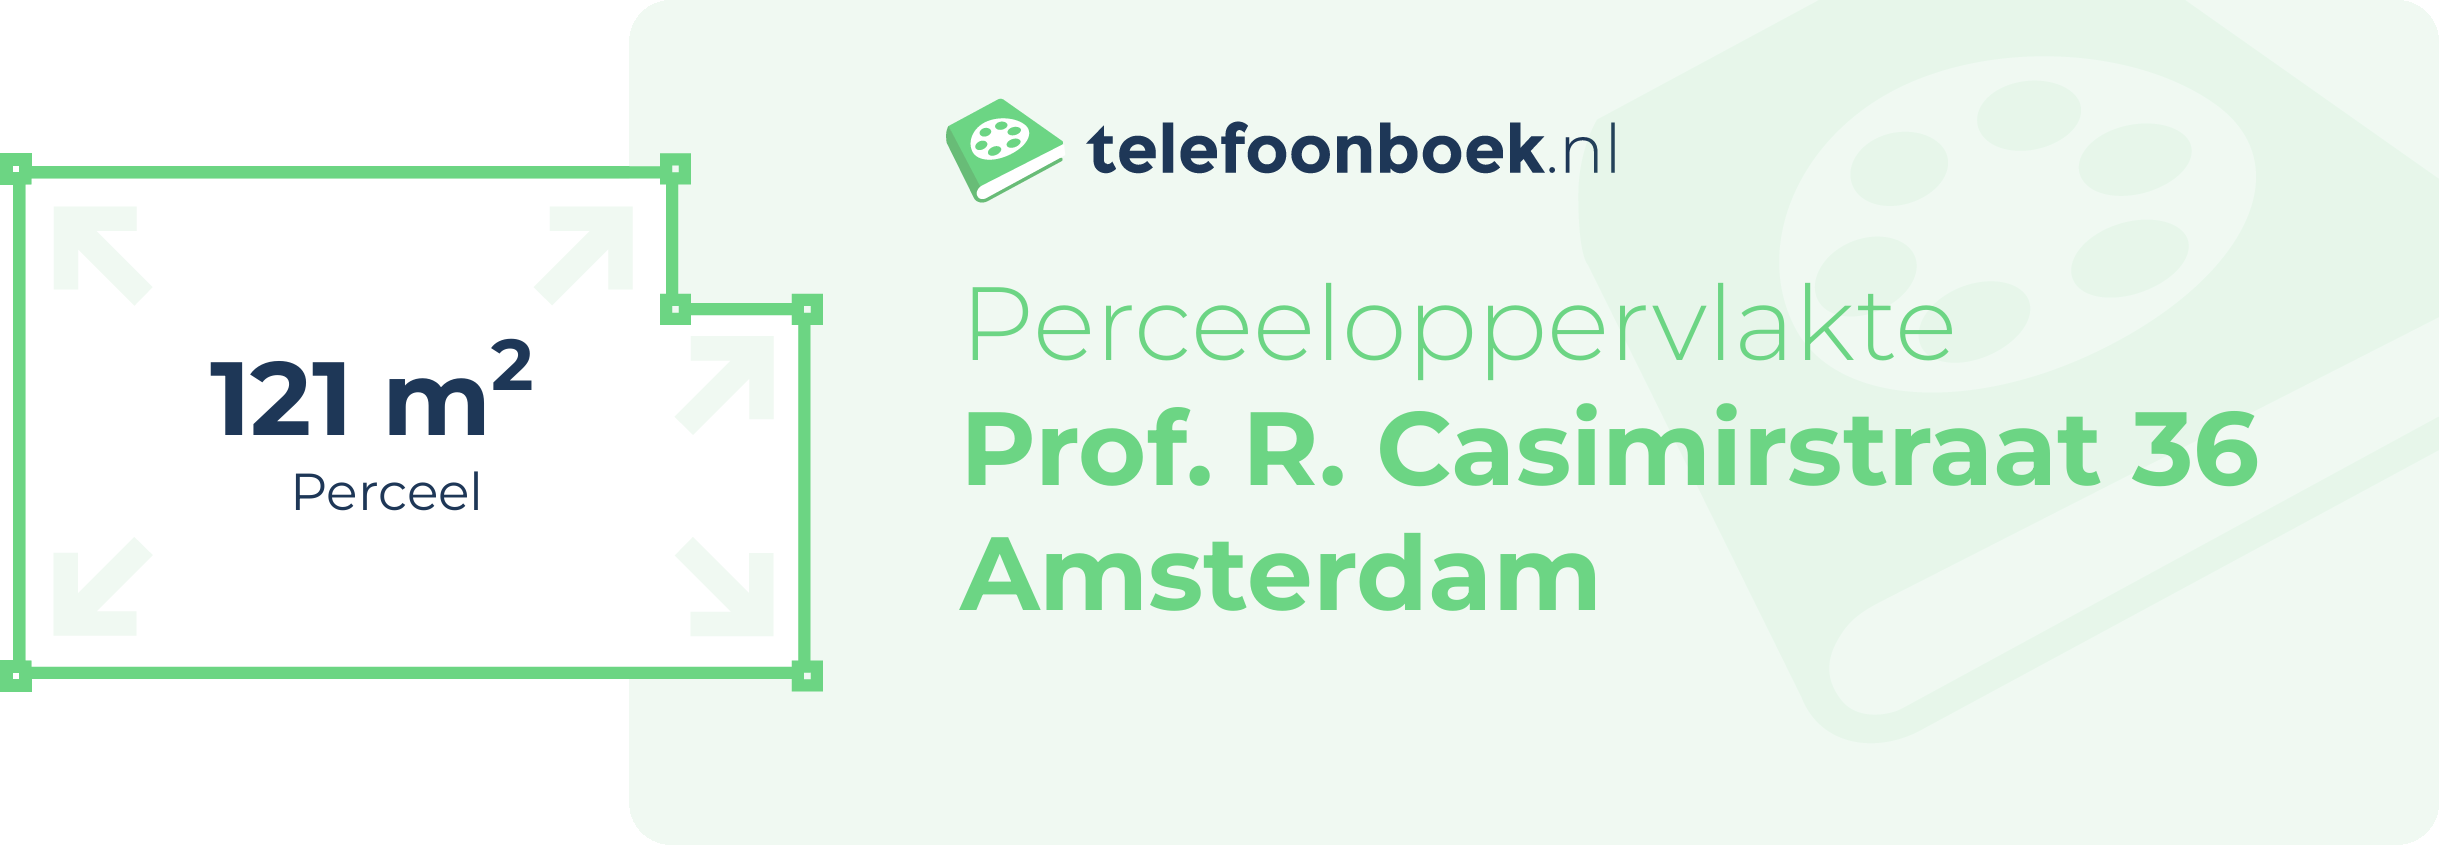 Perceeloppervlakte Prof. R. Casimirstraat 36 Amsterdam